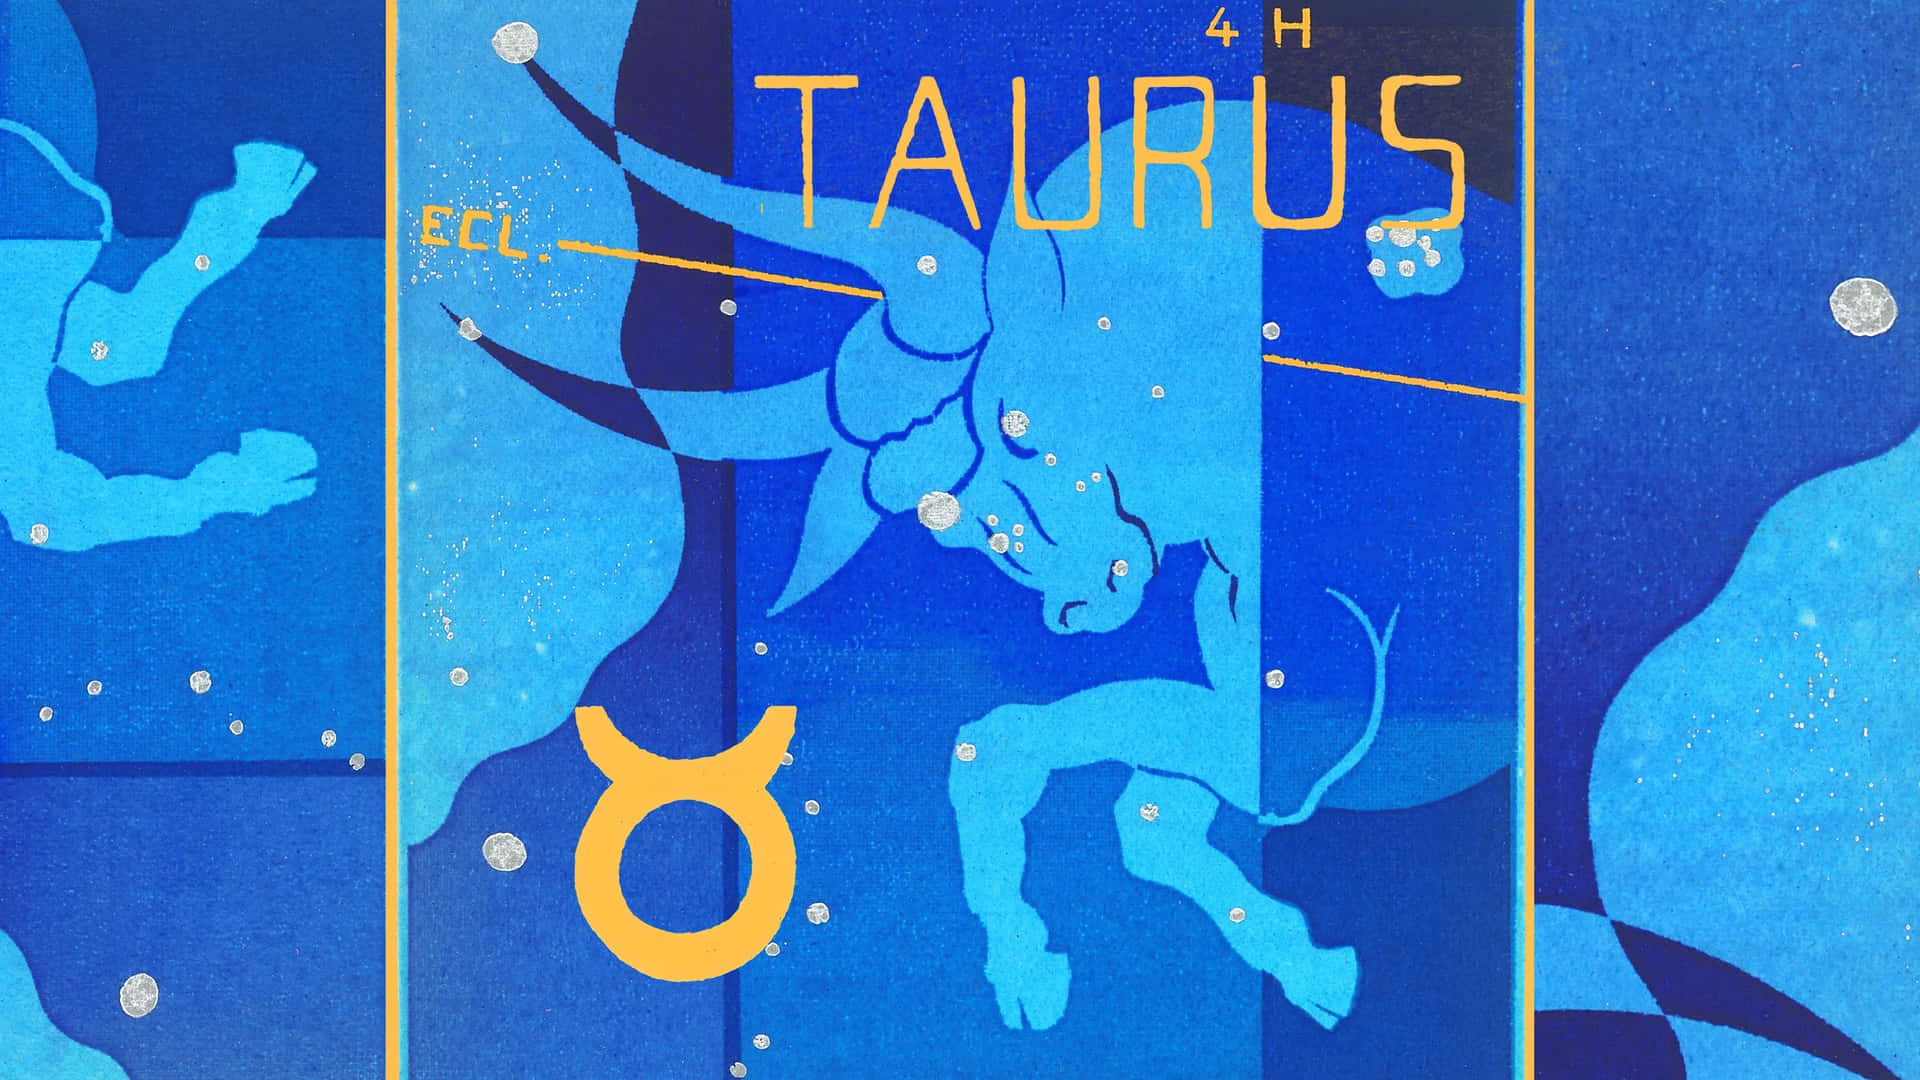 Taurus - The Zodiac Sign